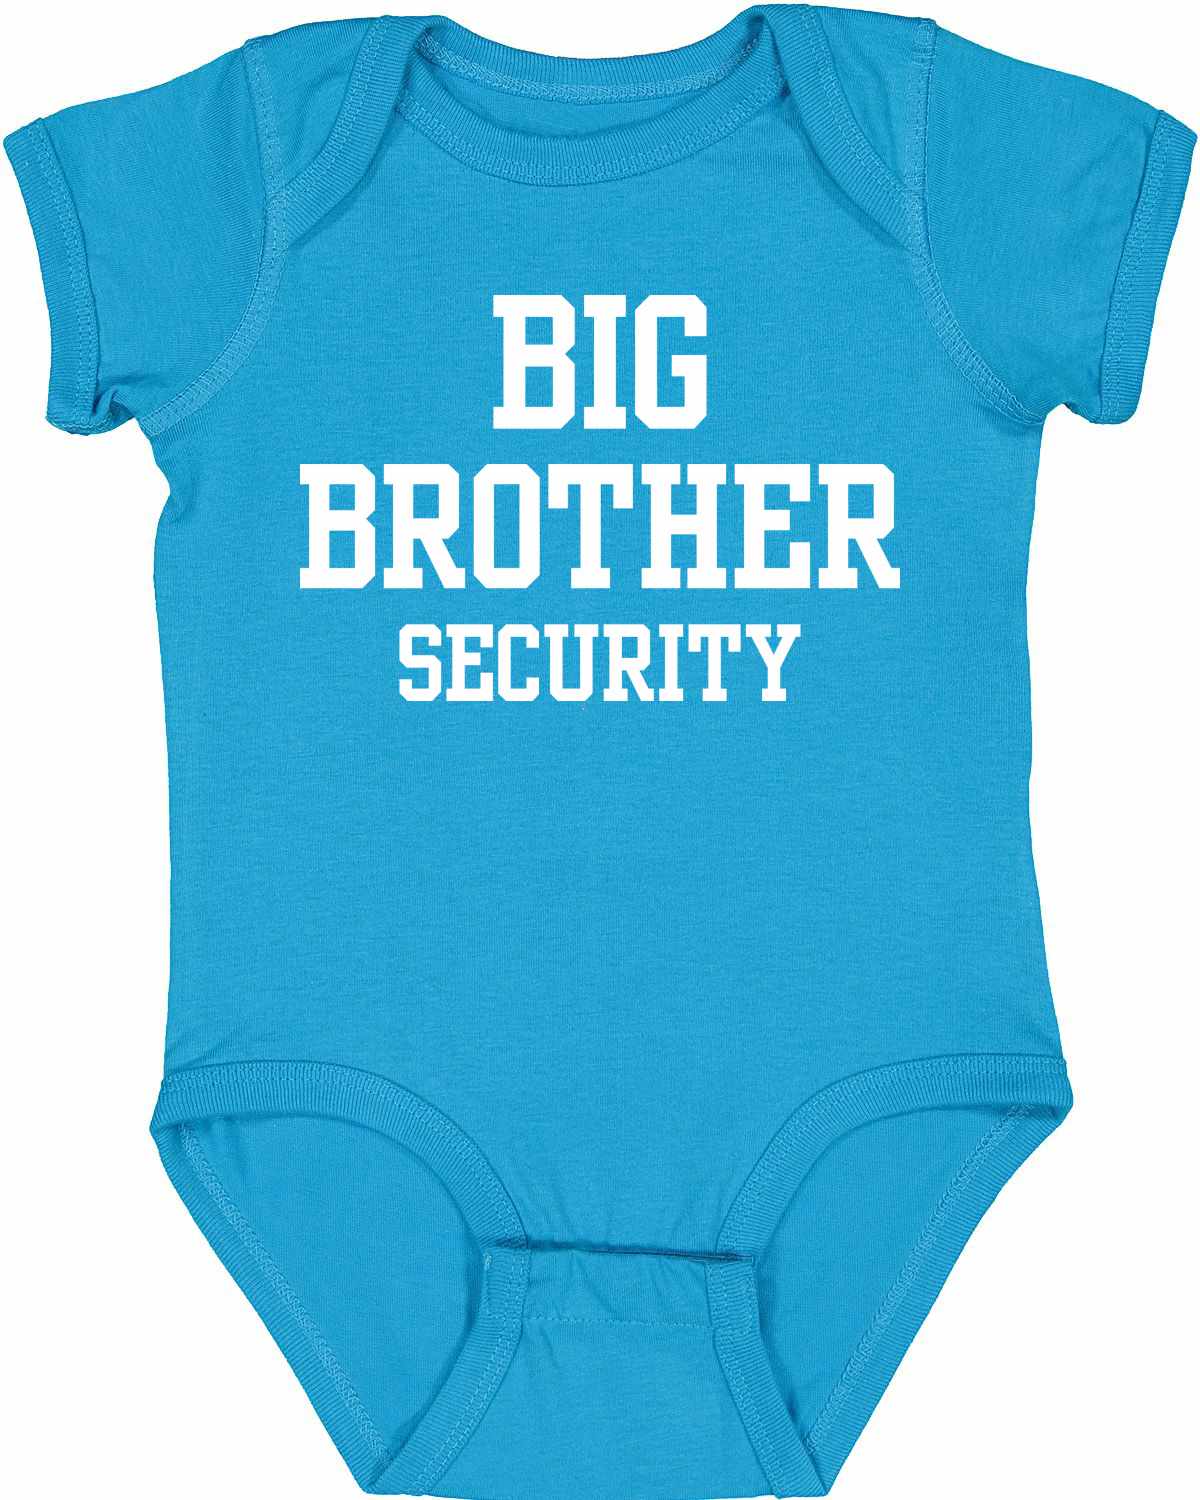 Big Brother Security Infant BodySuit